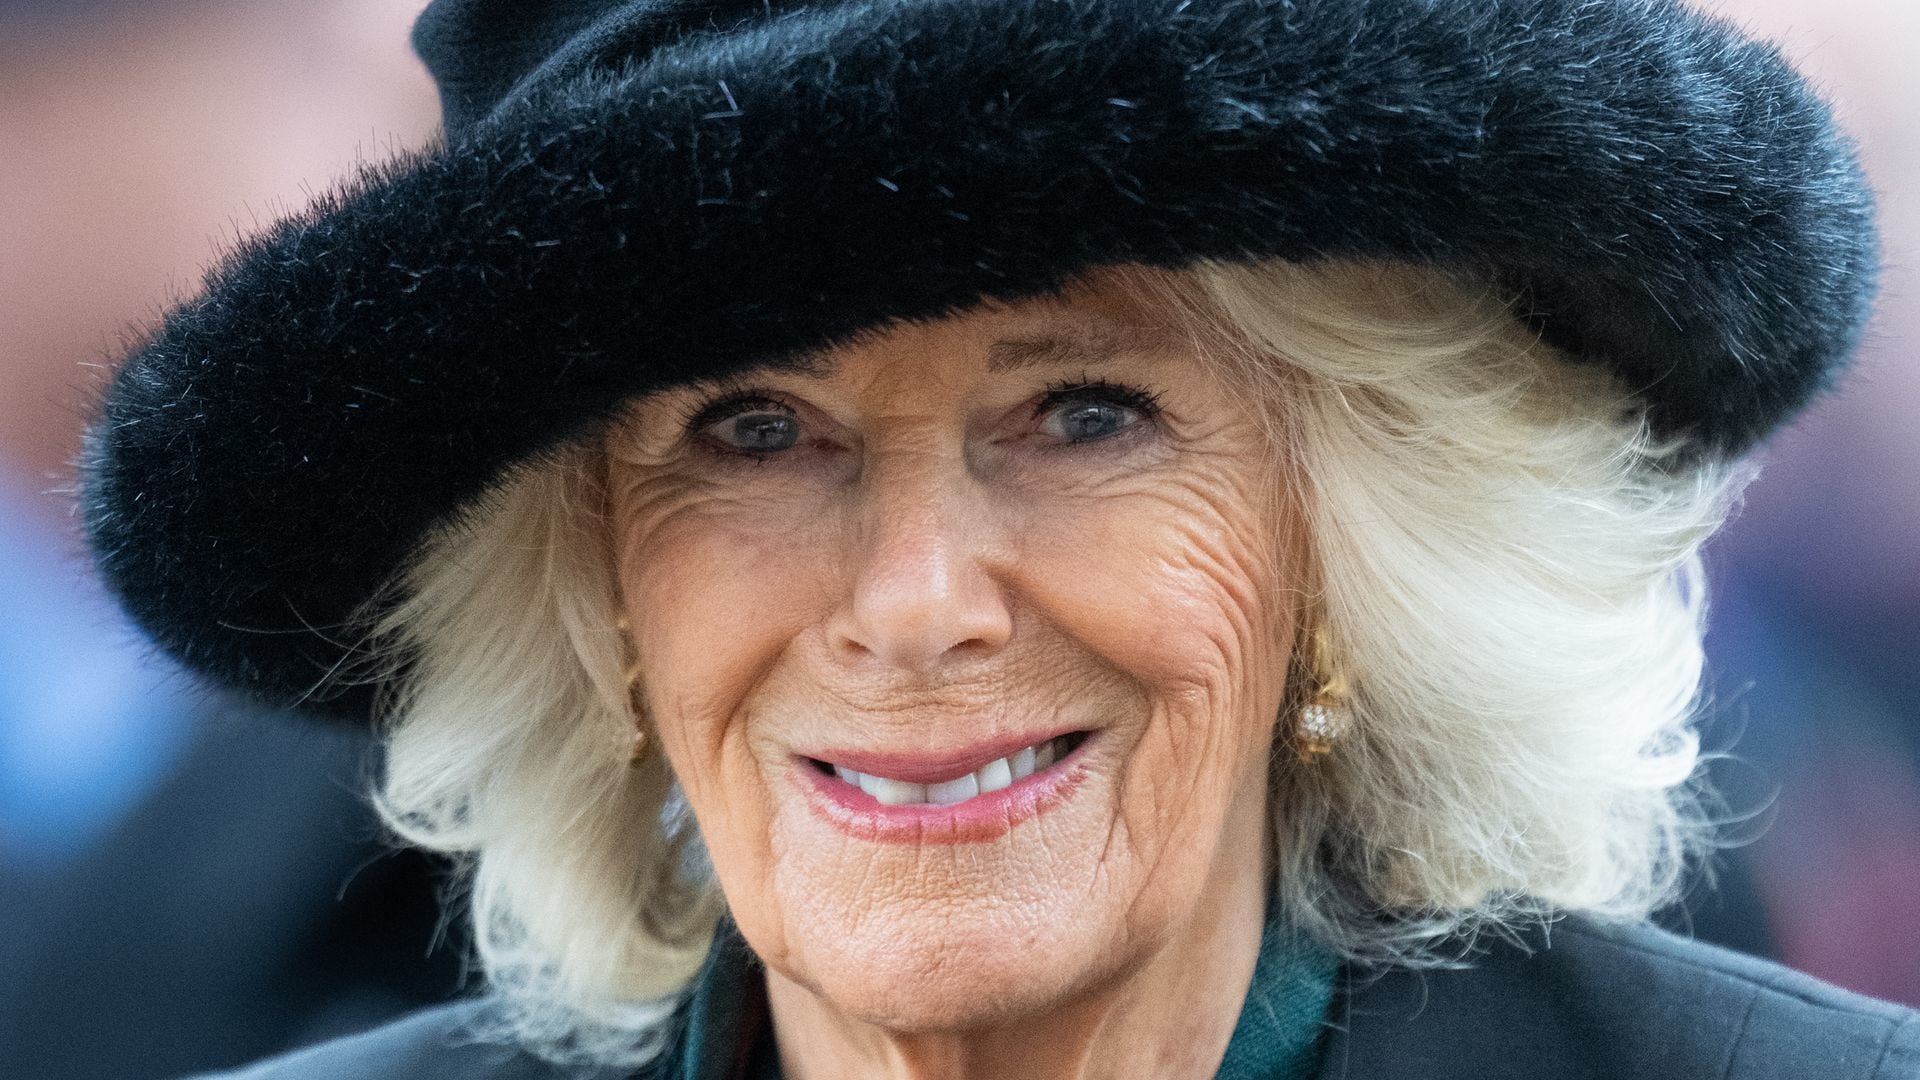 Queen Camilla in black hat